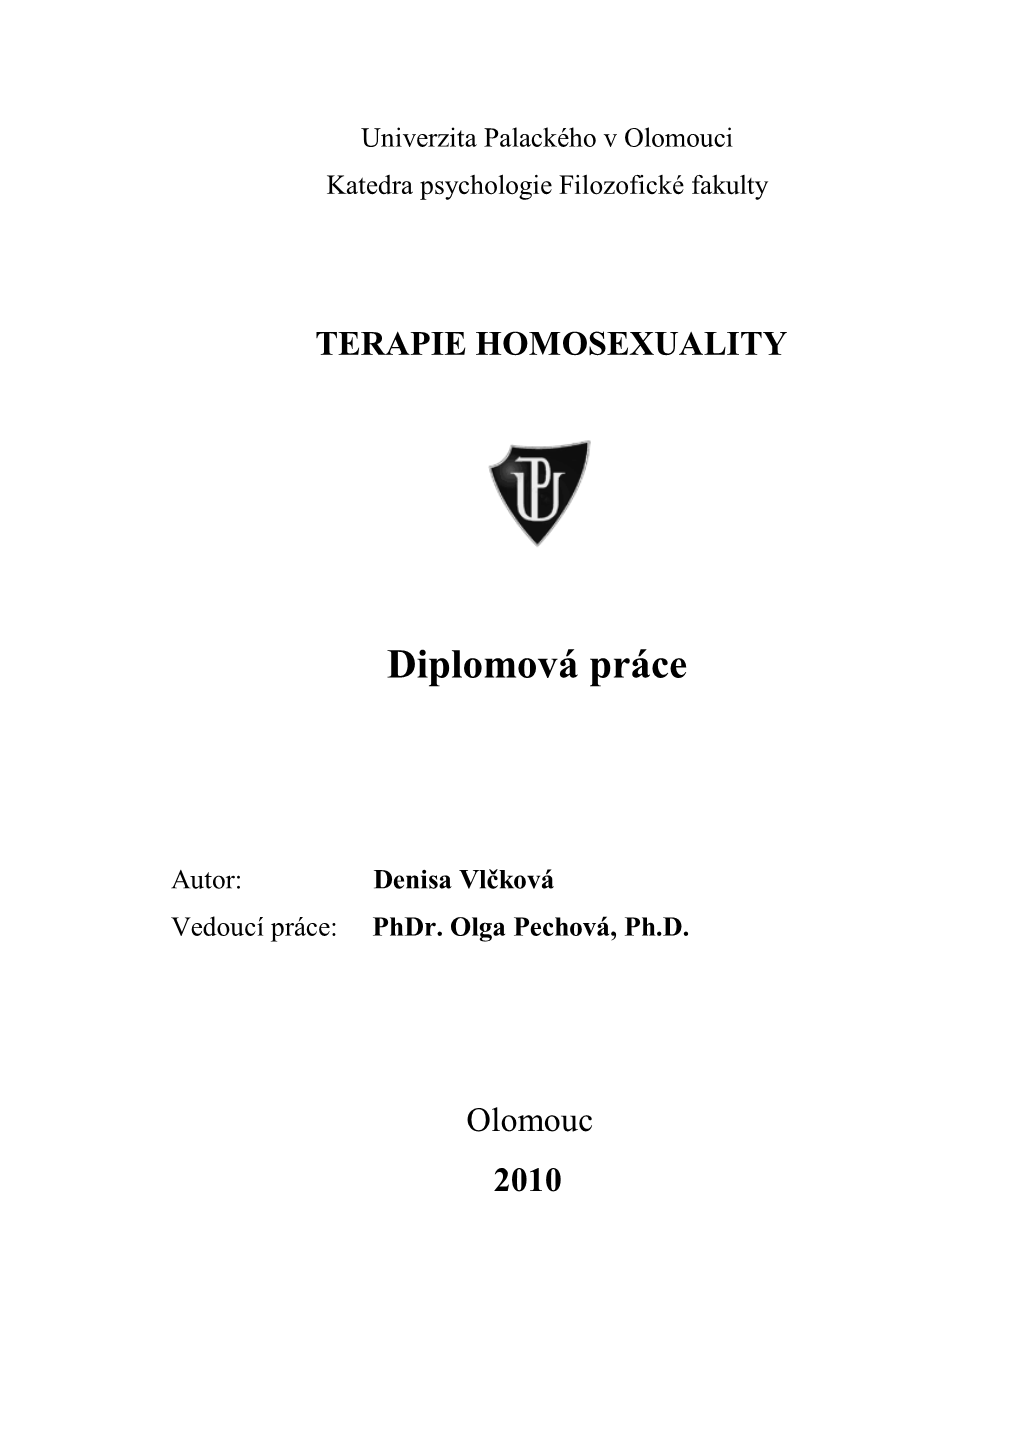 Terapie Homosexuality